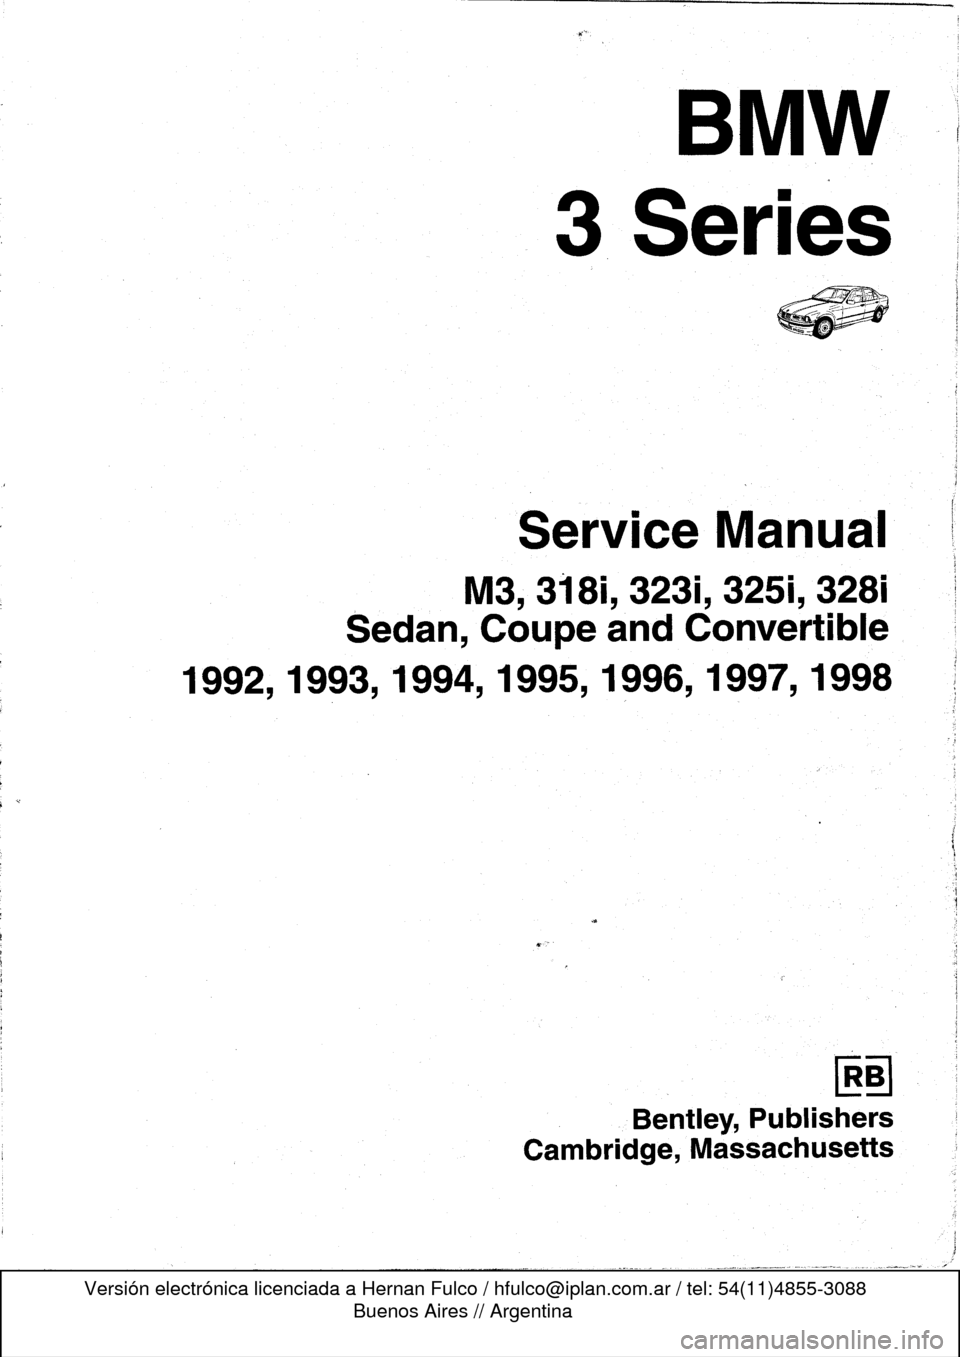 BMW 325i 1992 E36 Workshop Manual 
B
mw

3
Series

M3,
3181,3231,3251,
3281

Sedan,
Coupe
and
Convertible

1992,1993,1994,1995,
1996,1997,
1998

Bentley,
Publishers

Cambridge,
Massachusetts 